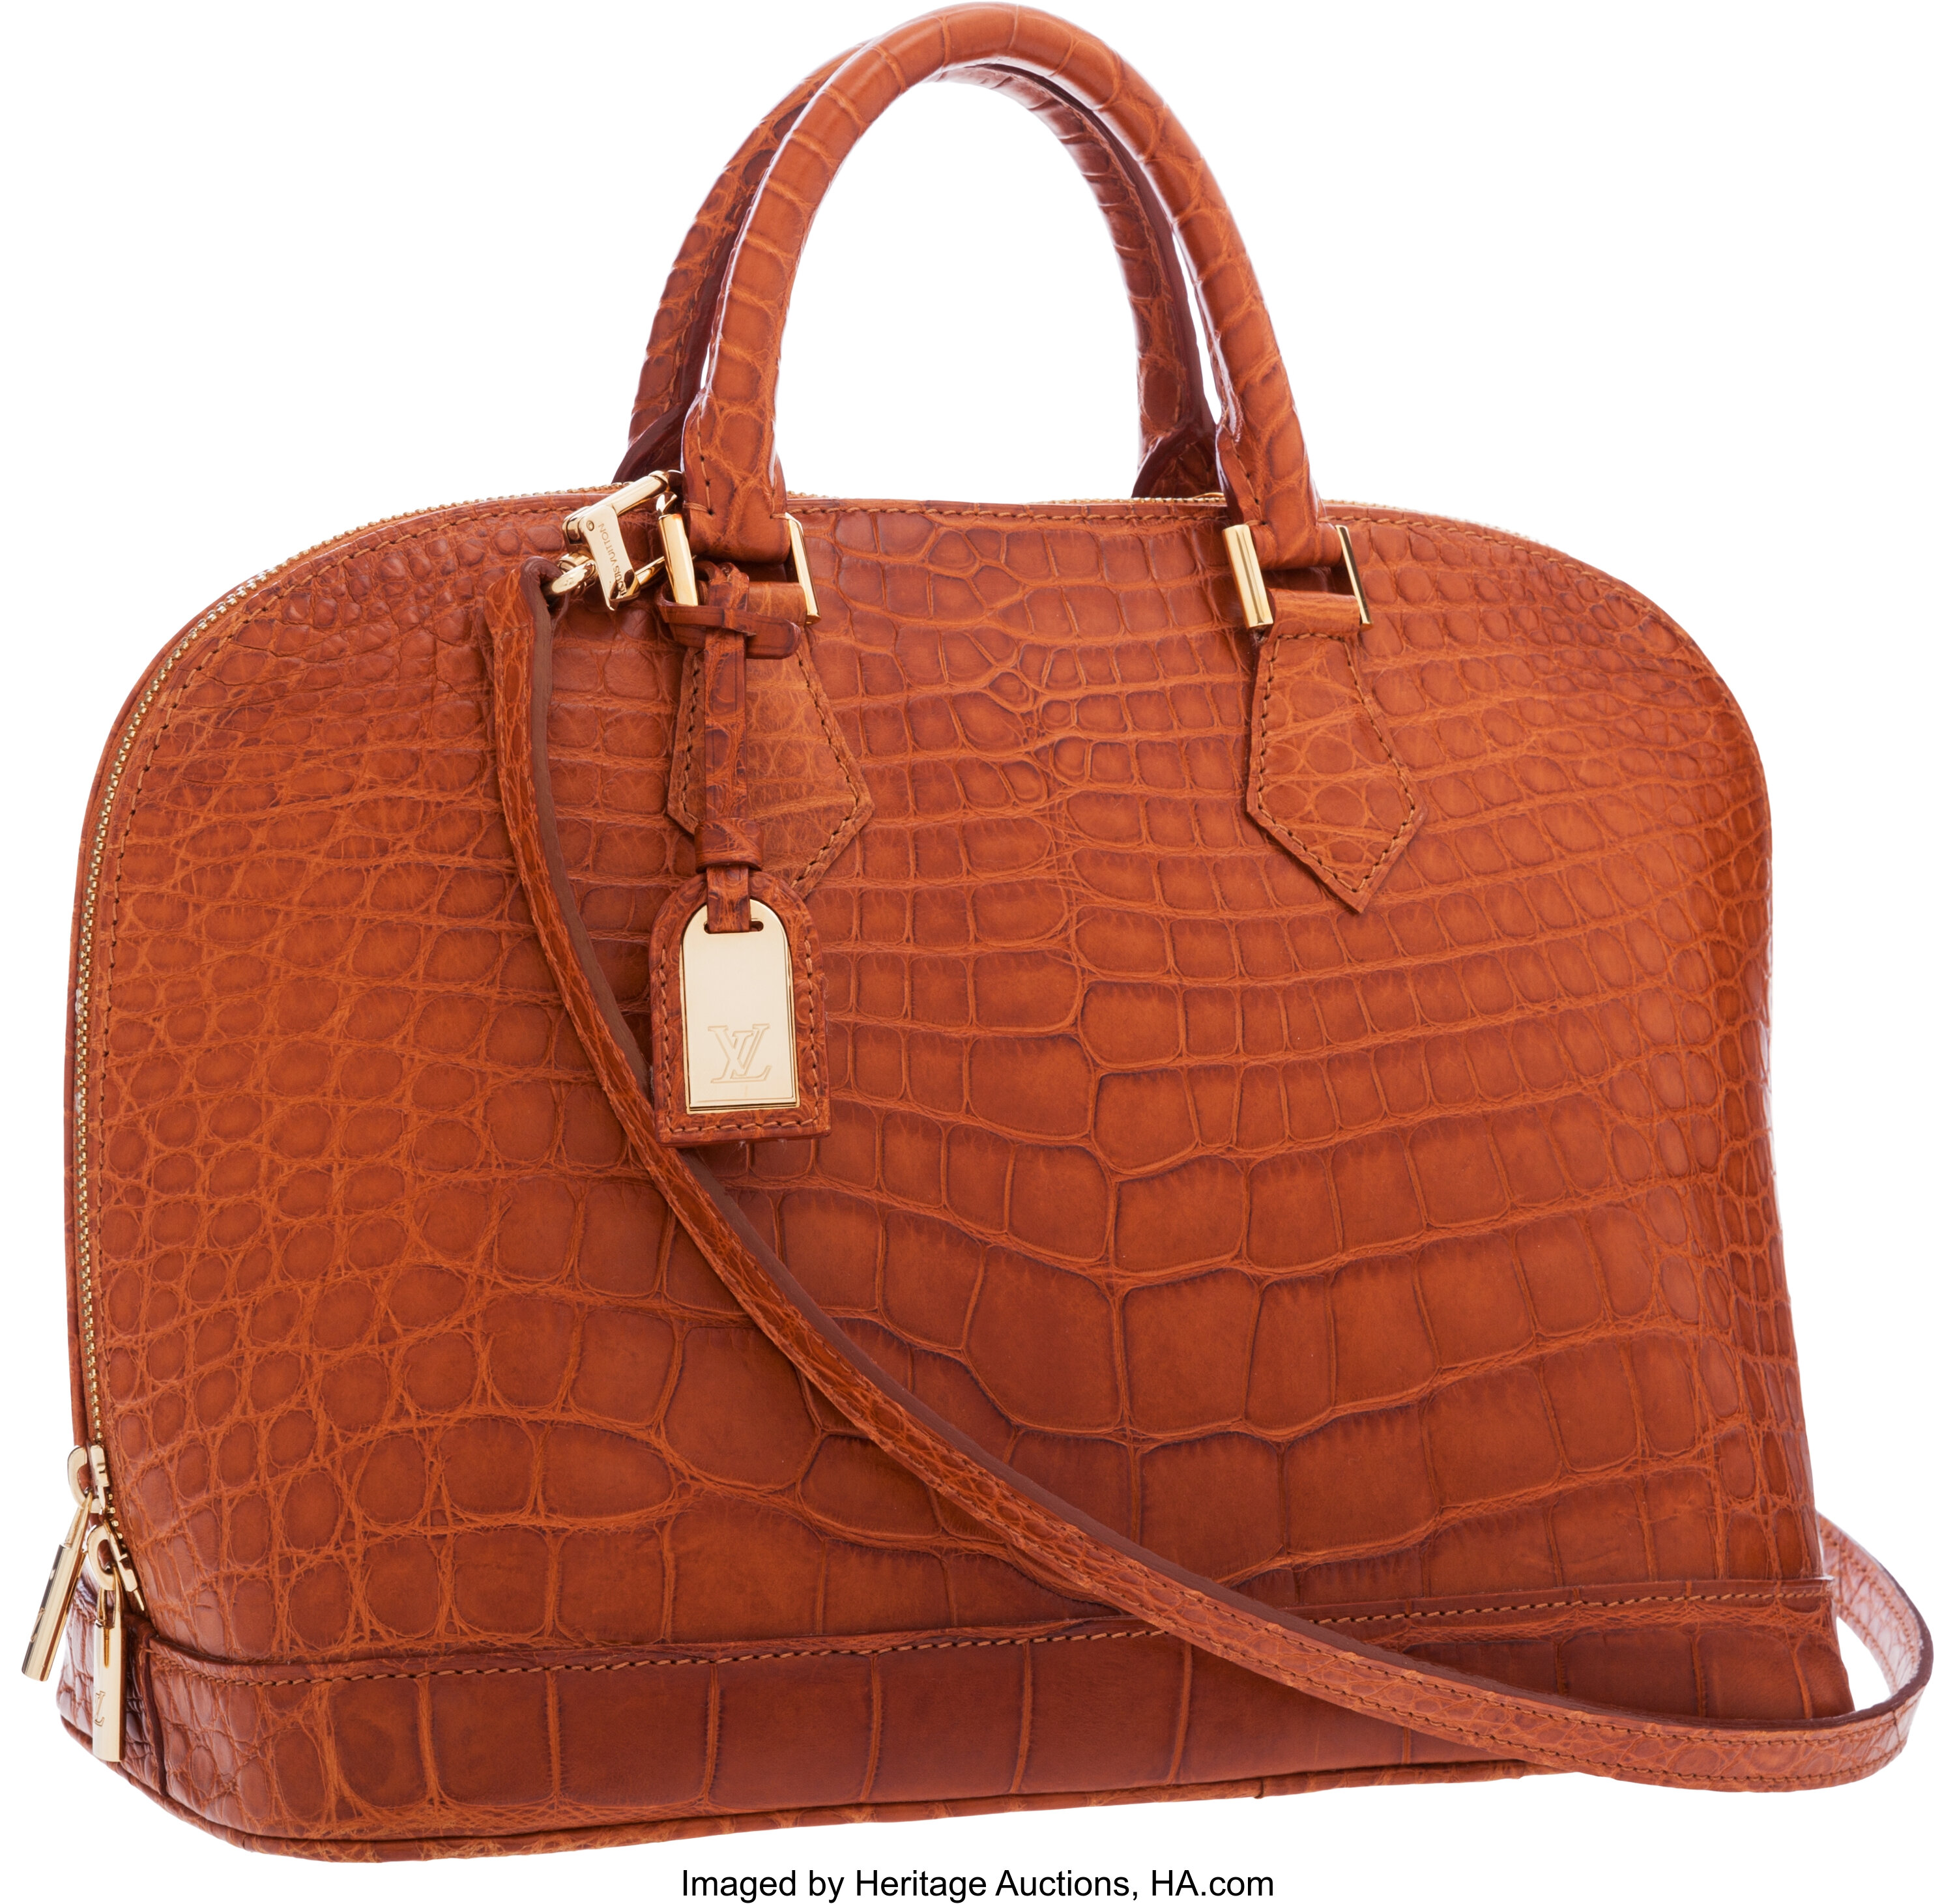 Louis Vuitton Sac Fermoir Handbag Denim with Alligator GM Blue 1804501